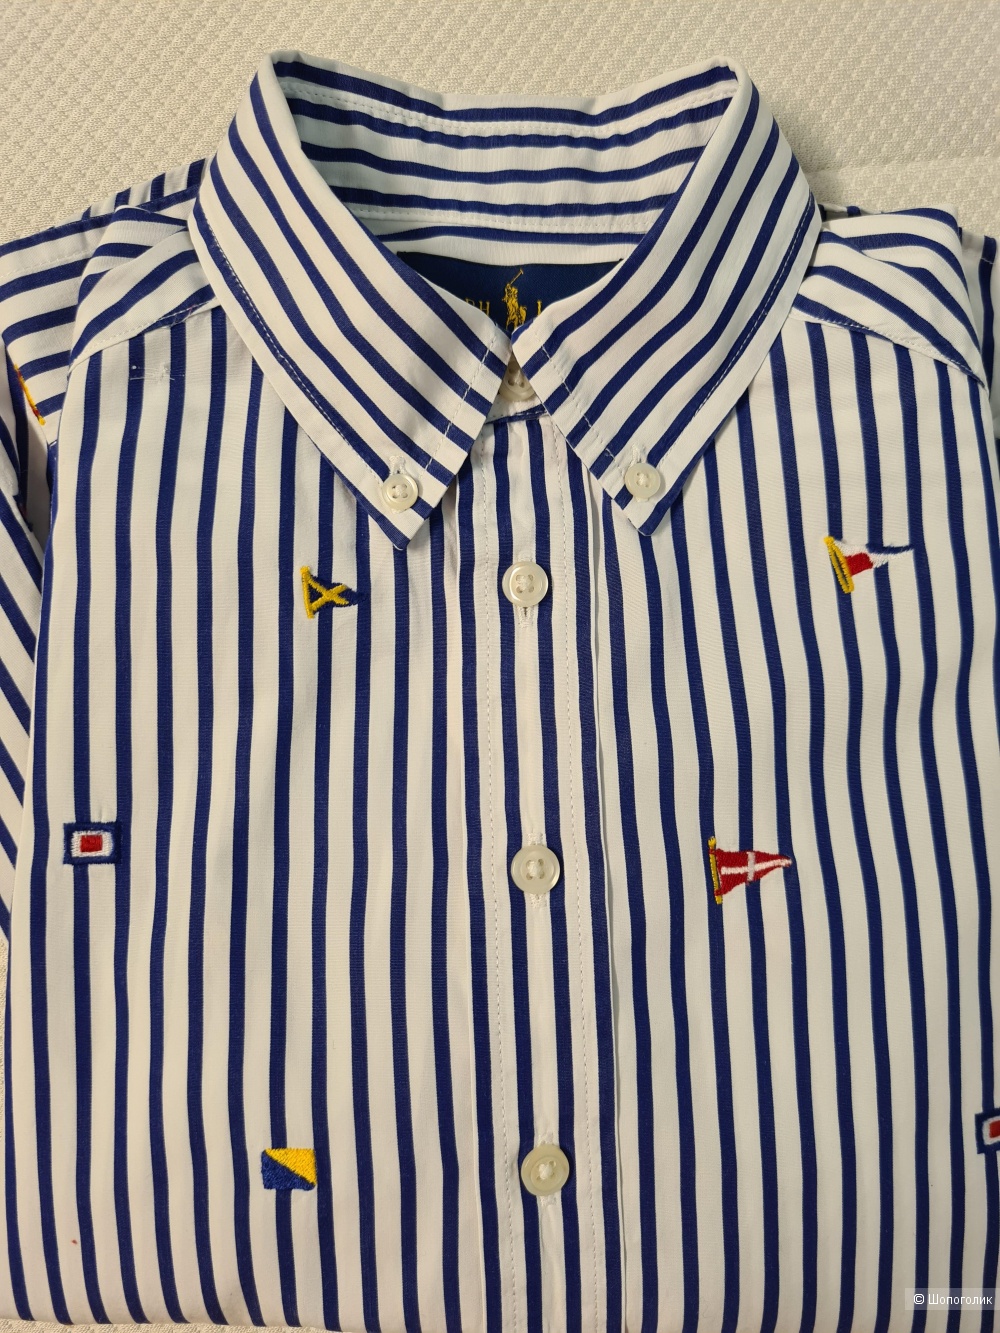 Рубашка для мальчика Ralph Lauren р.S (8)